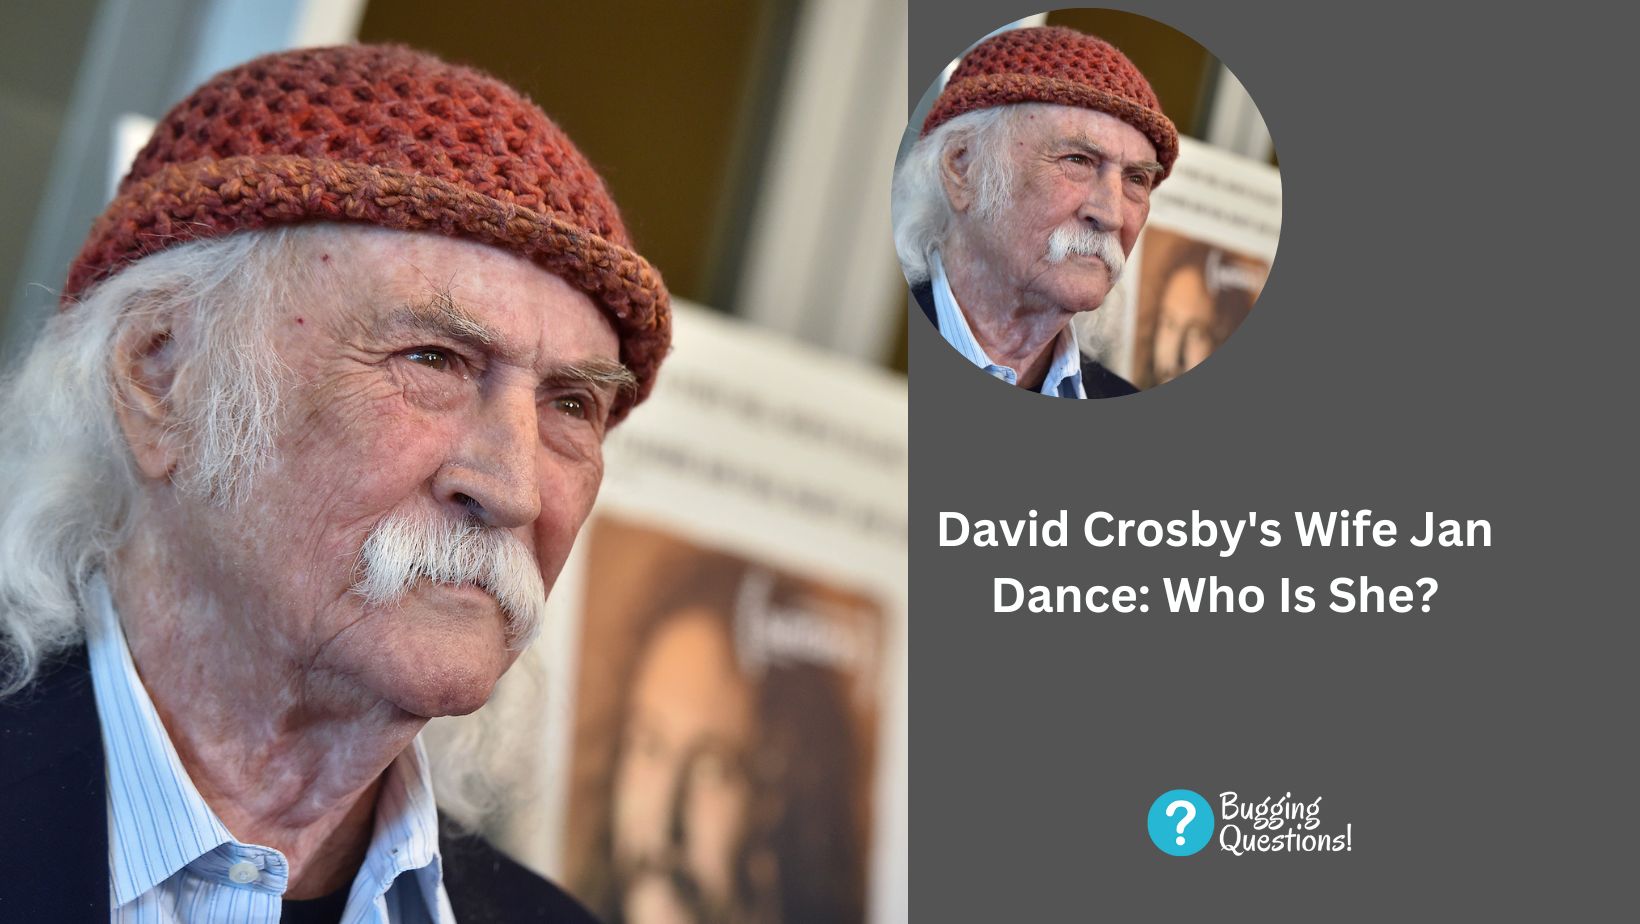 David Crosby's Wife Jan Dance: Who Is She?